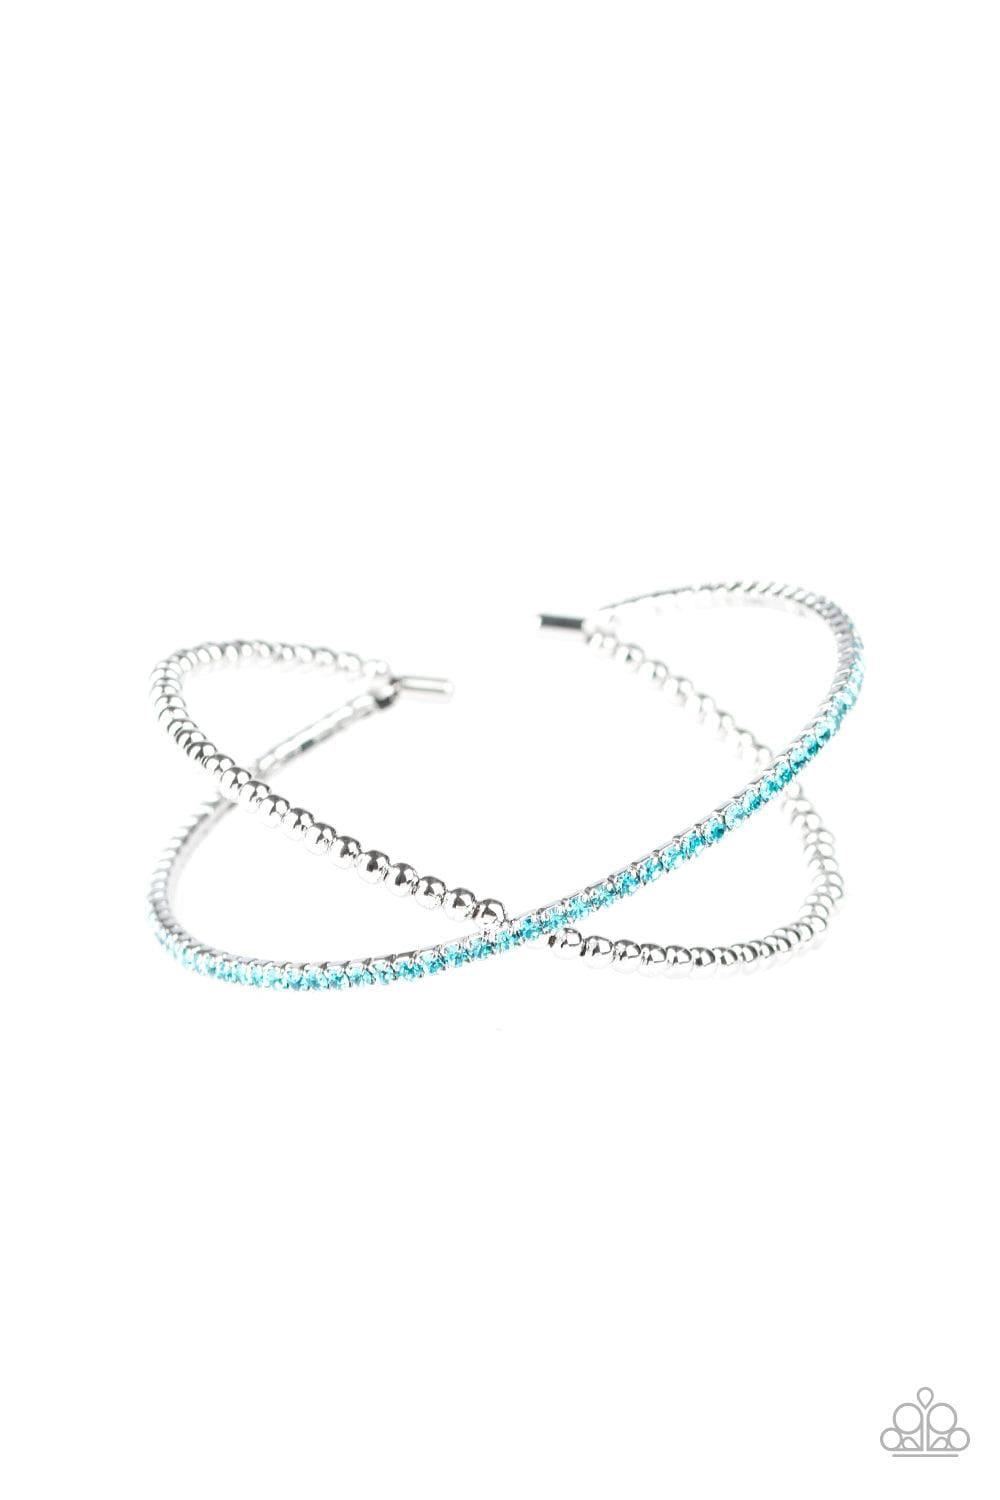 Paparazzi Accessories - Chicly Crisscrossed - Blue Bracelet - Bling by JessieK